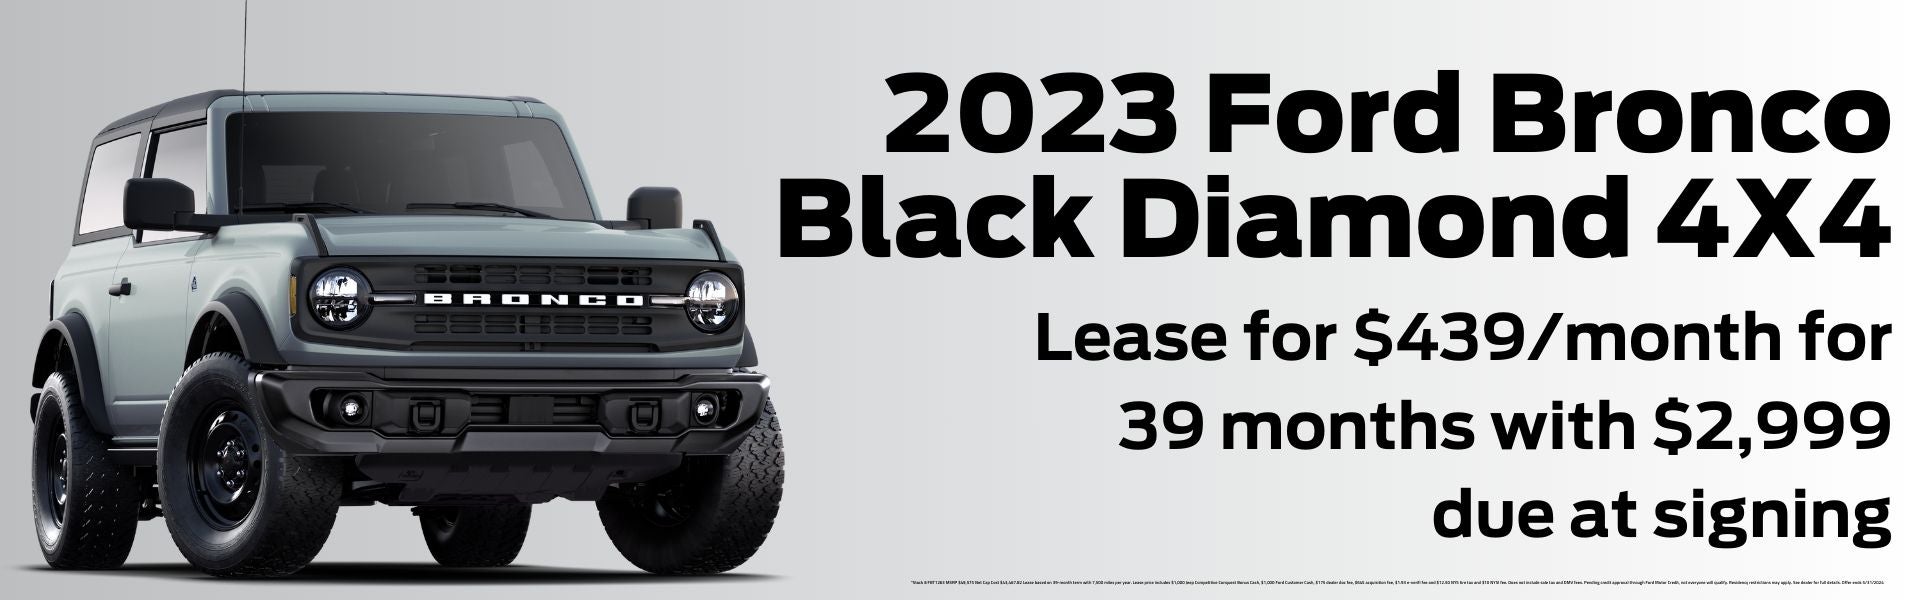 Ford Bronco Black Diamond 4x4